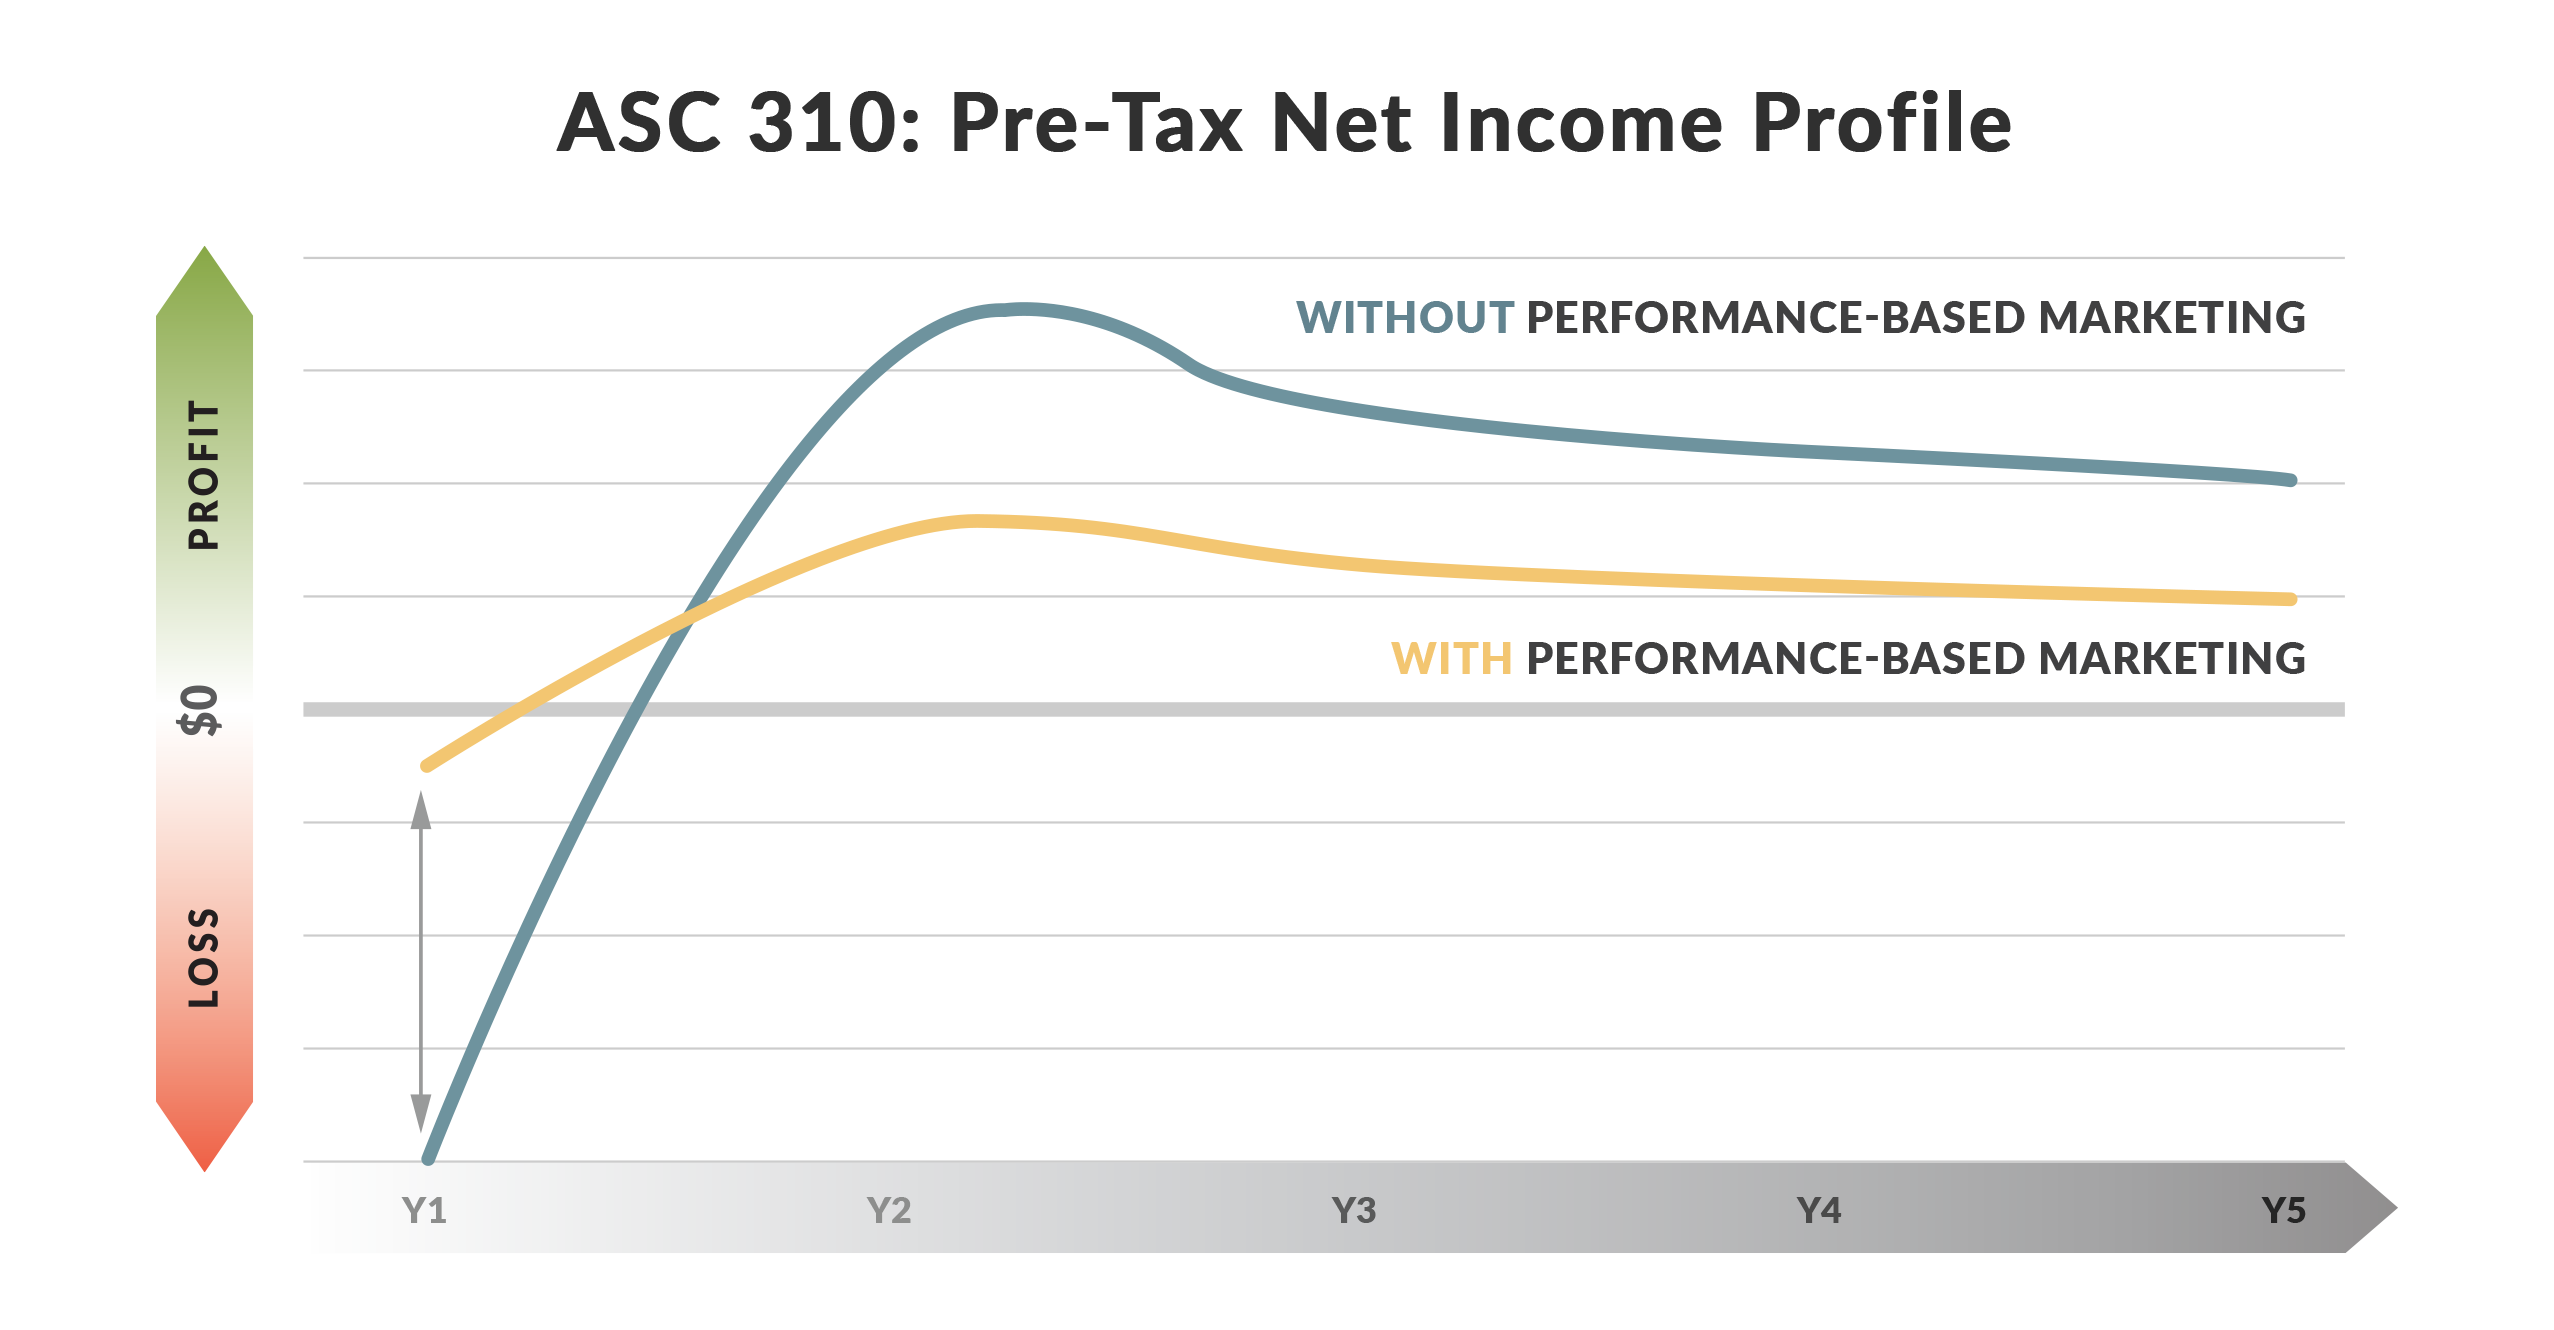 ASC 310 Pre-Tax Net Income